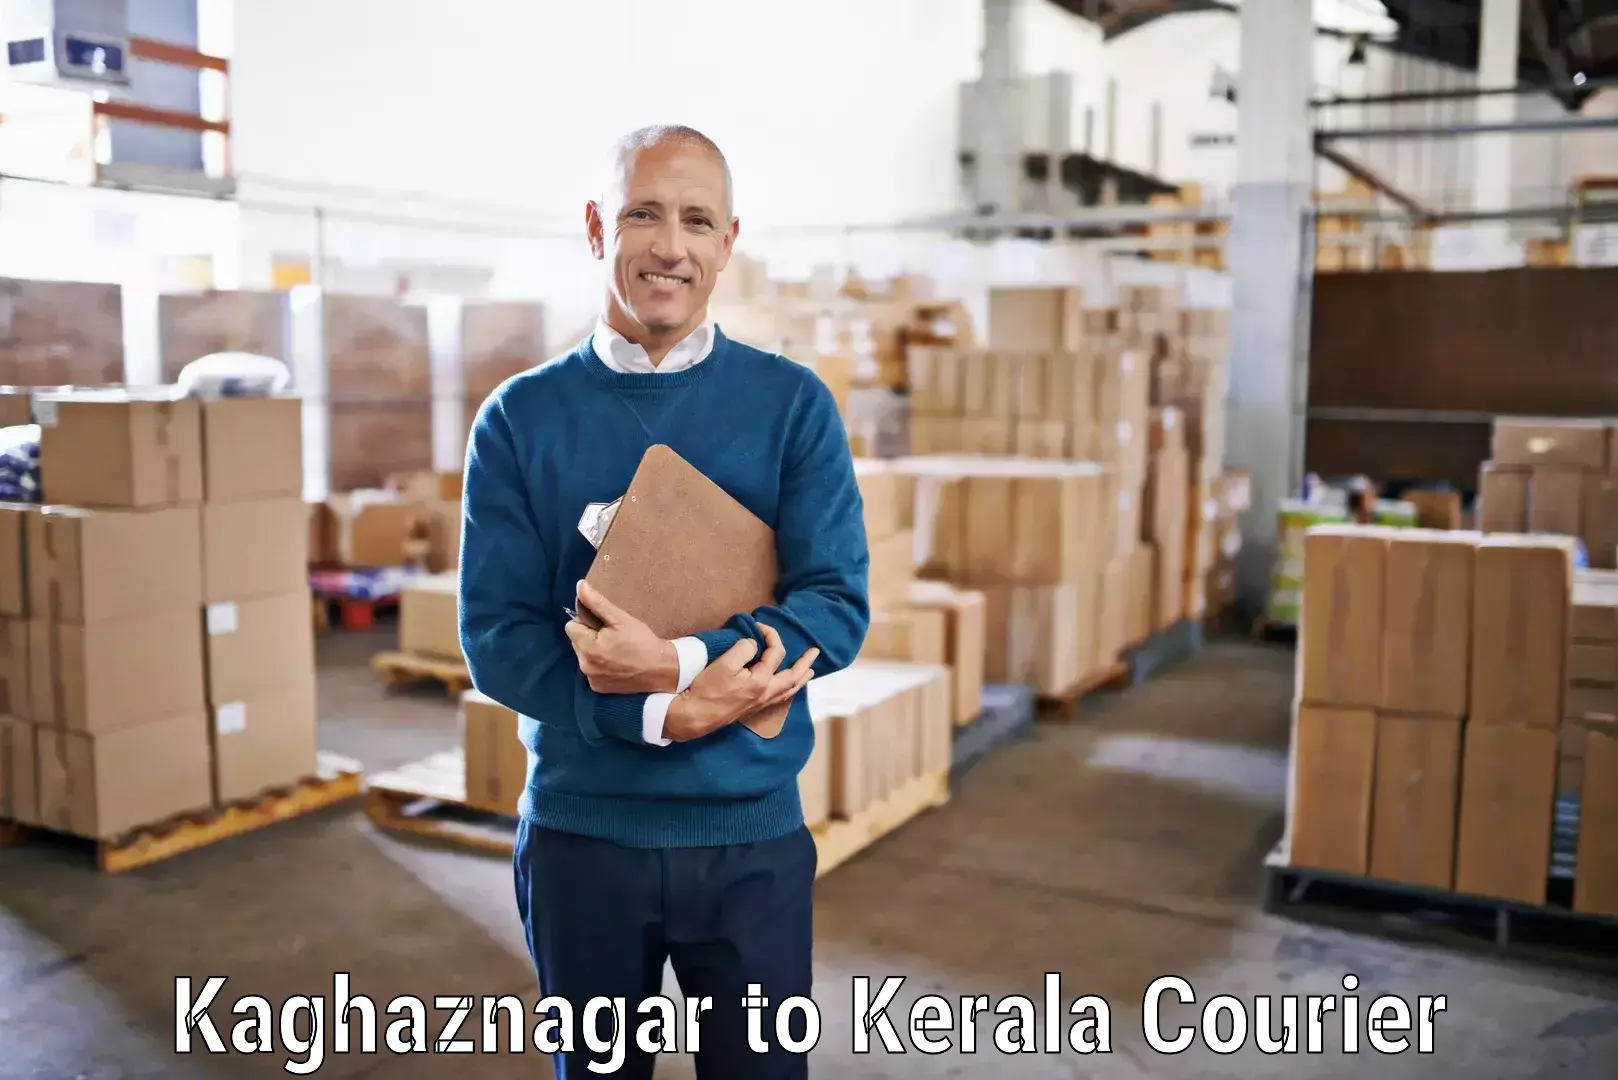 Courier service comparison Kaghaznagar to Tiruvalla